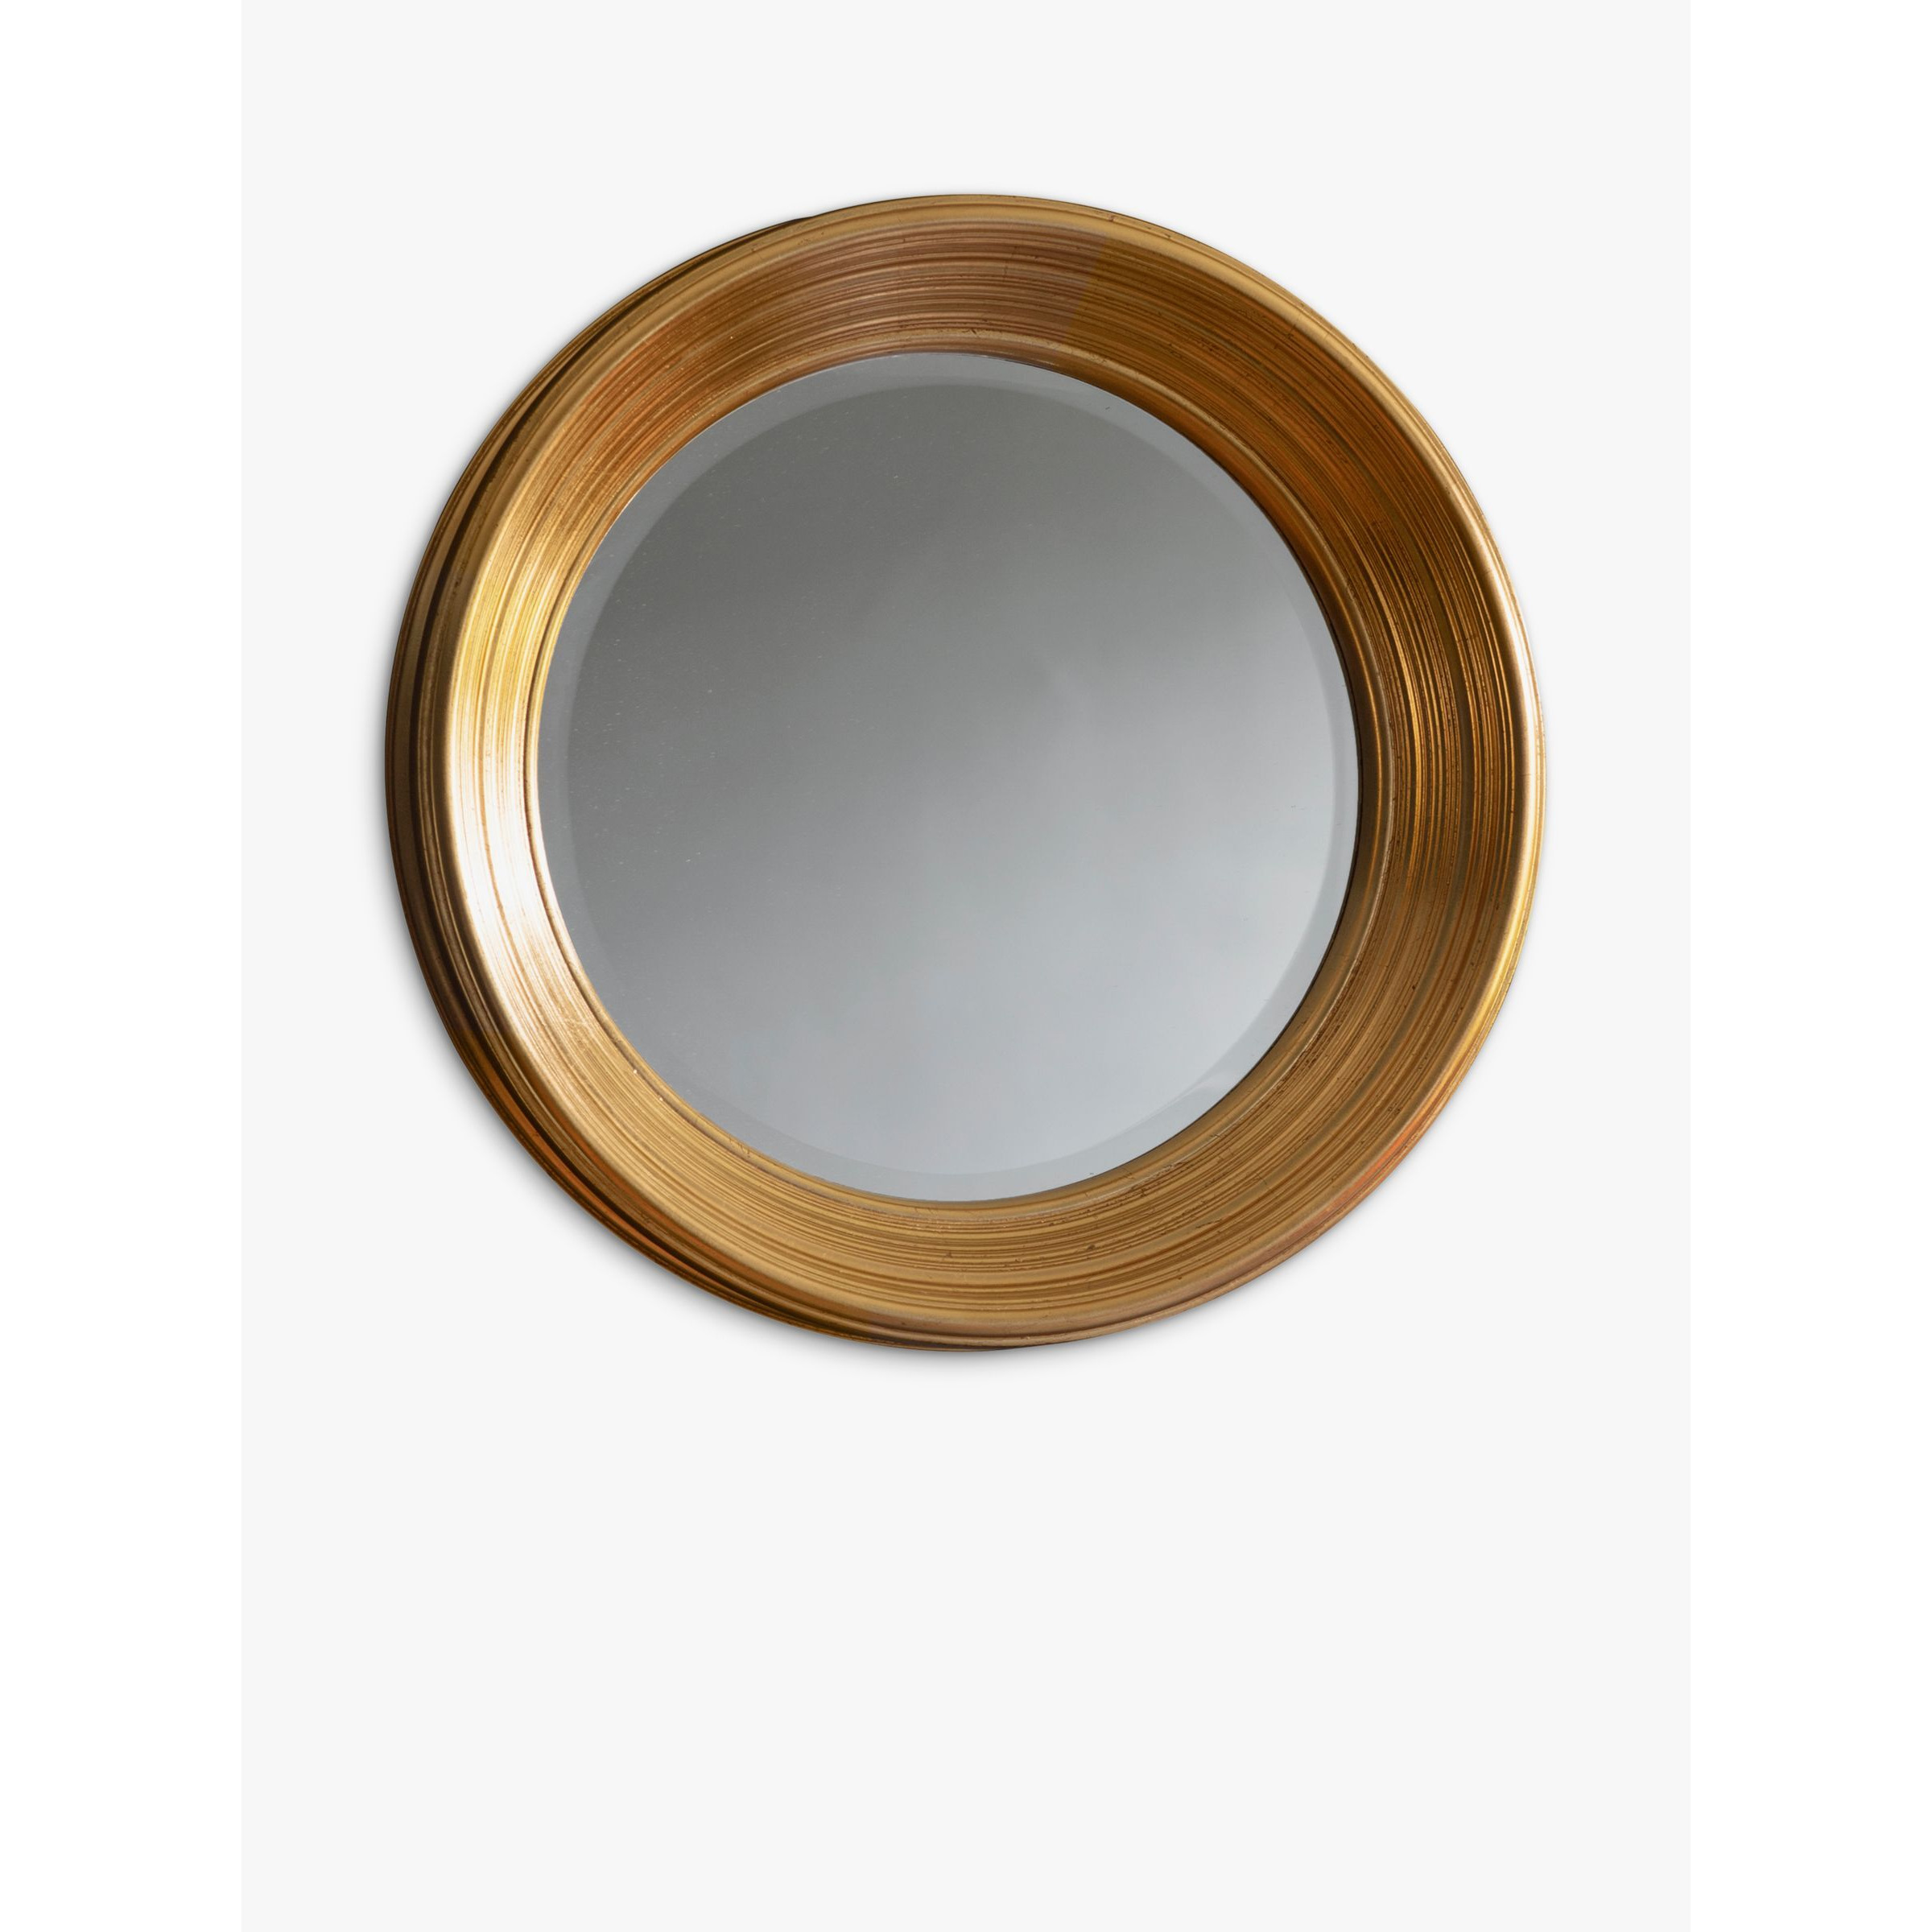 Gallery Direct Chaplin Round Mirror, 65cm, Gold - image 1